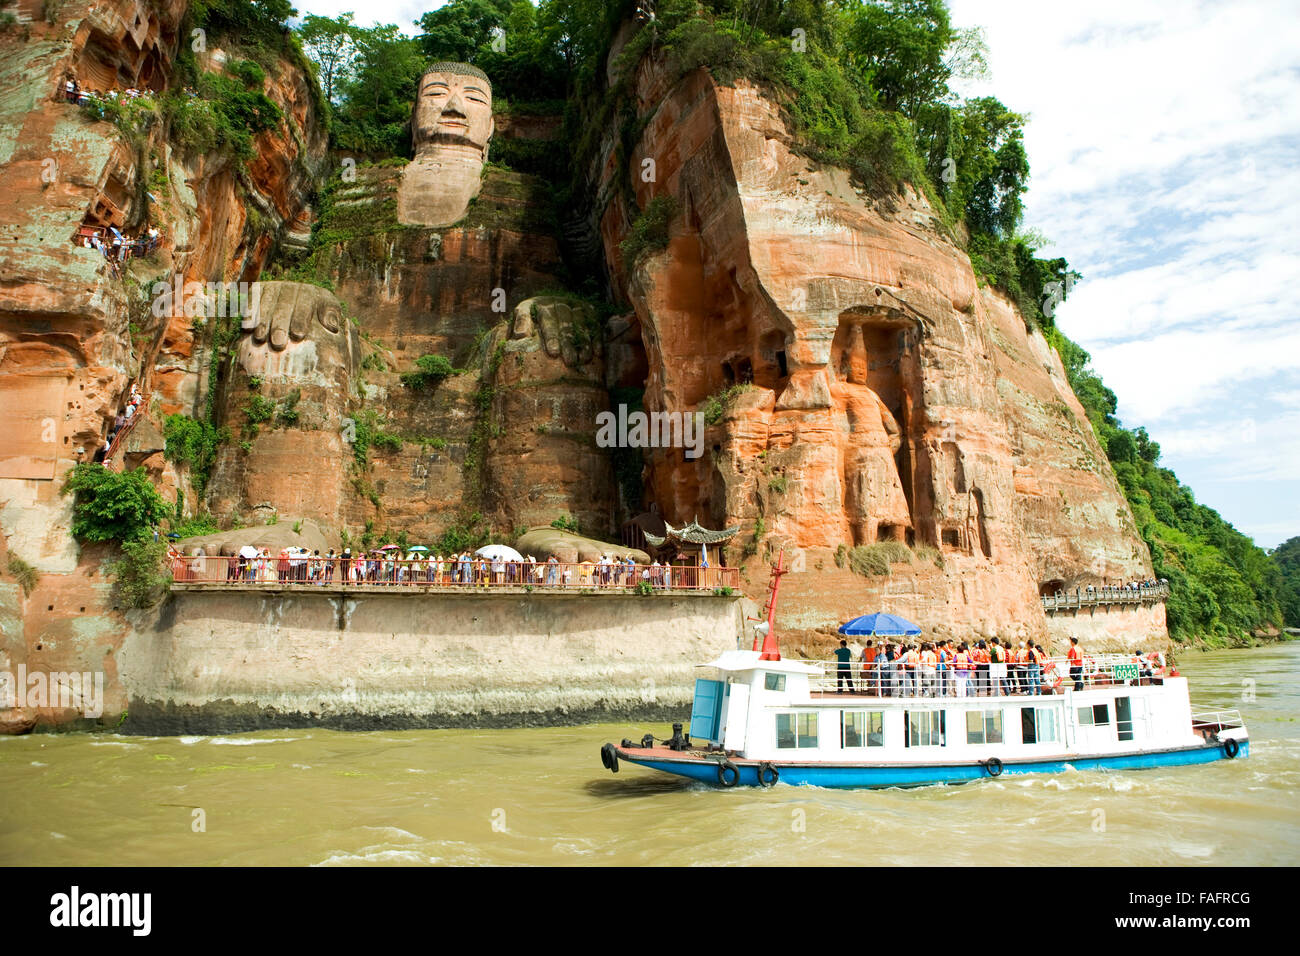 The Giant Buddha Of Leshan, China. Unesco World Heritage site Stock Photo